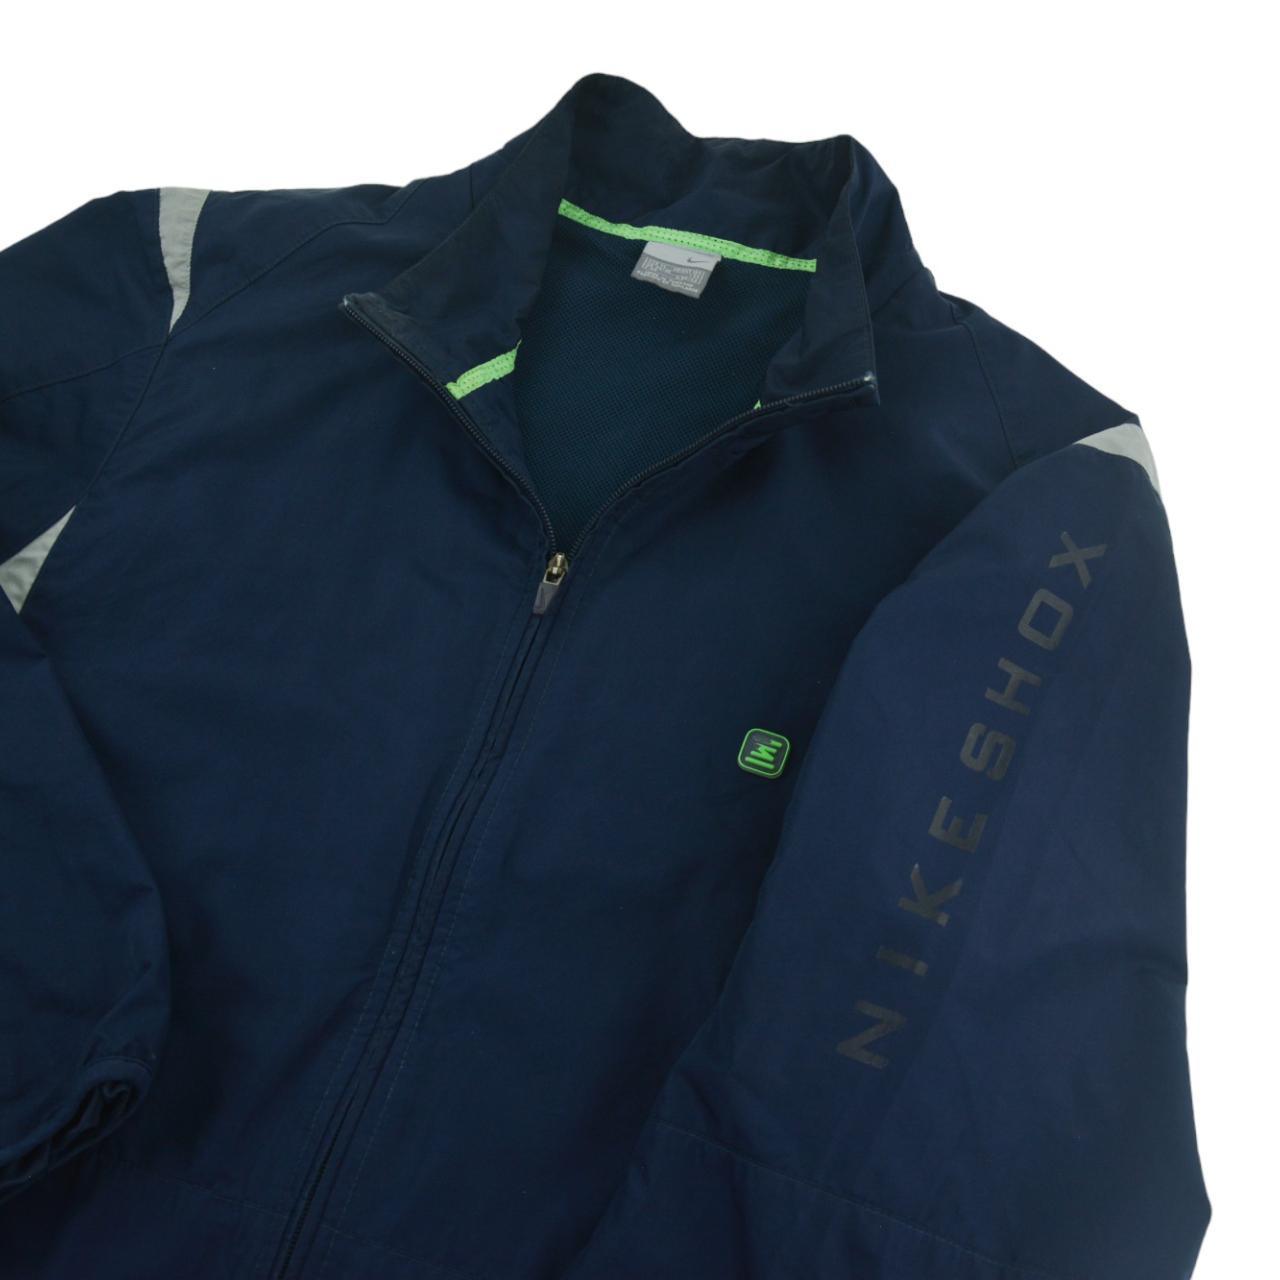 Vintage Nike SHOX Jacket Size XL - Known Source